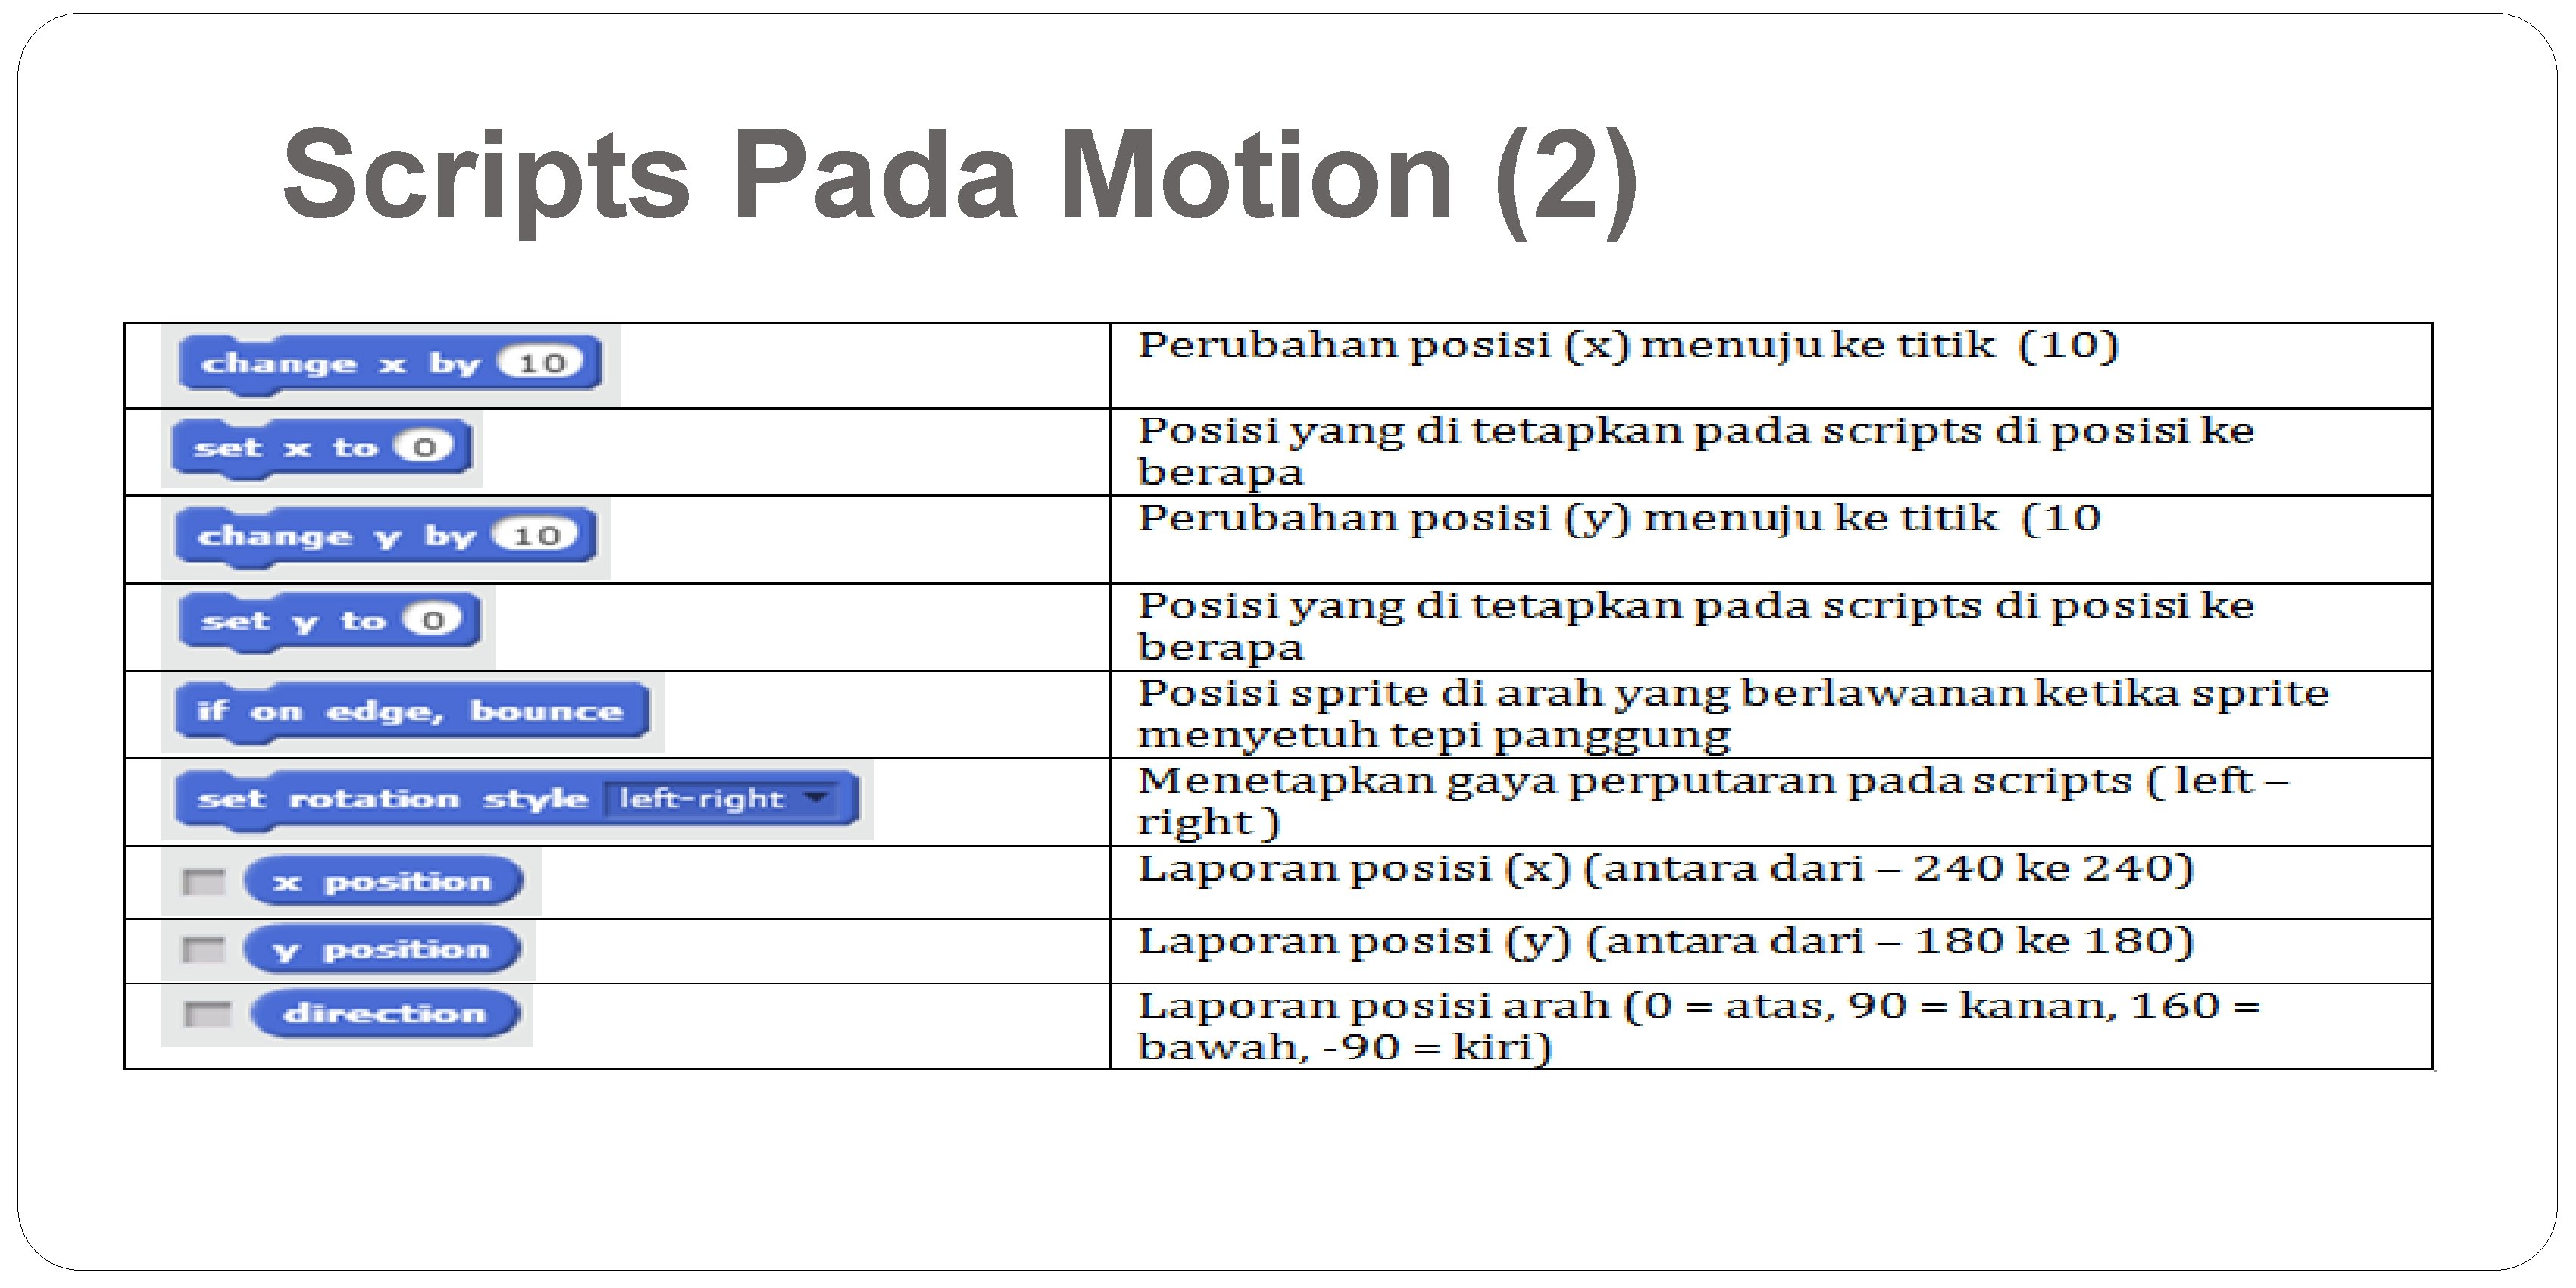 Scripts Pada Motion (2) 